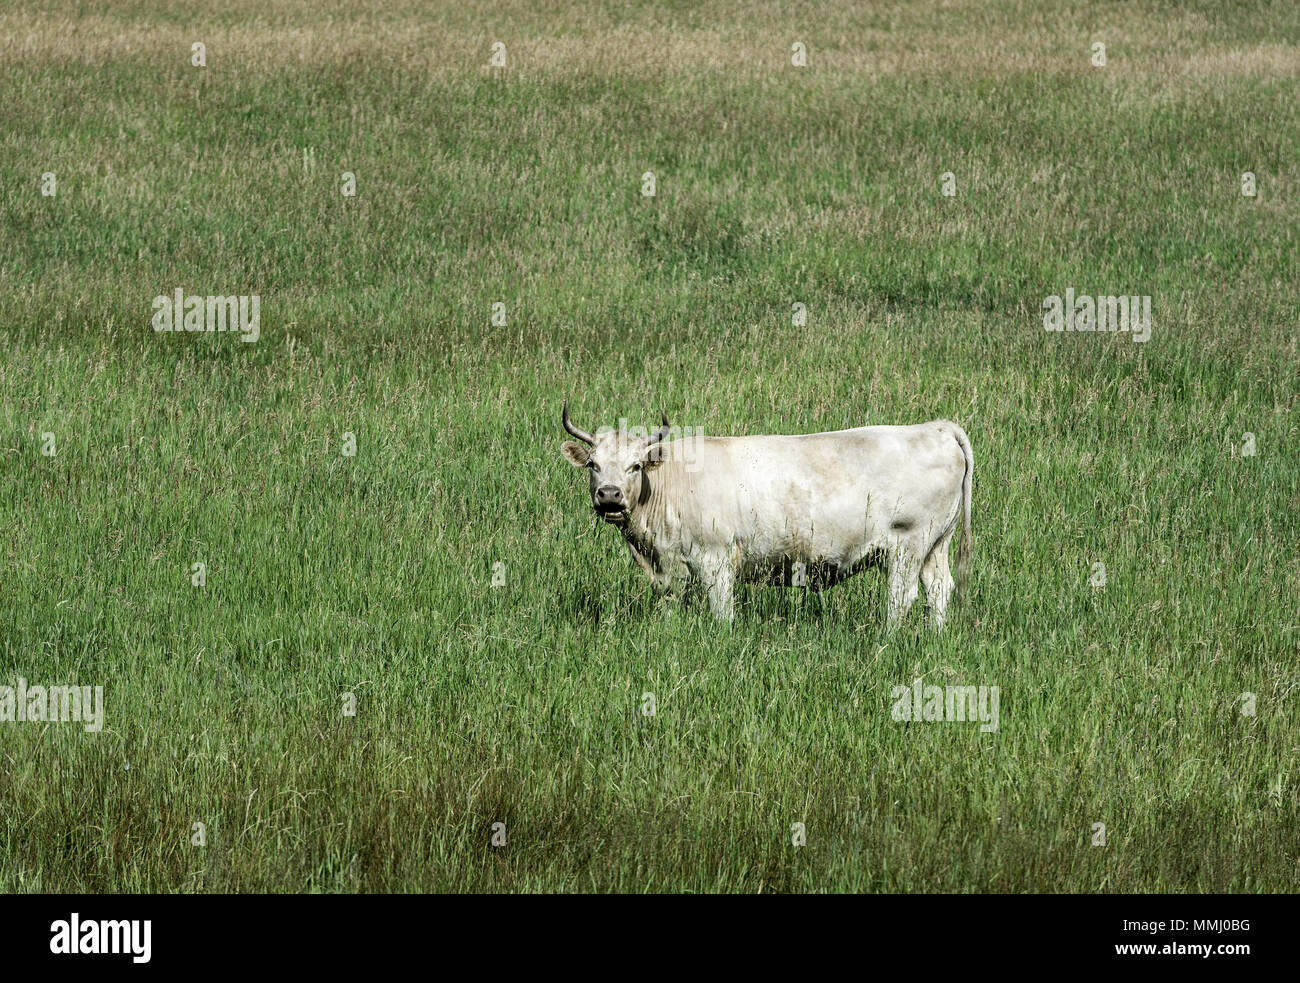 Steer feeding in a lush field of grass, Colorado, USA. Stock Photo